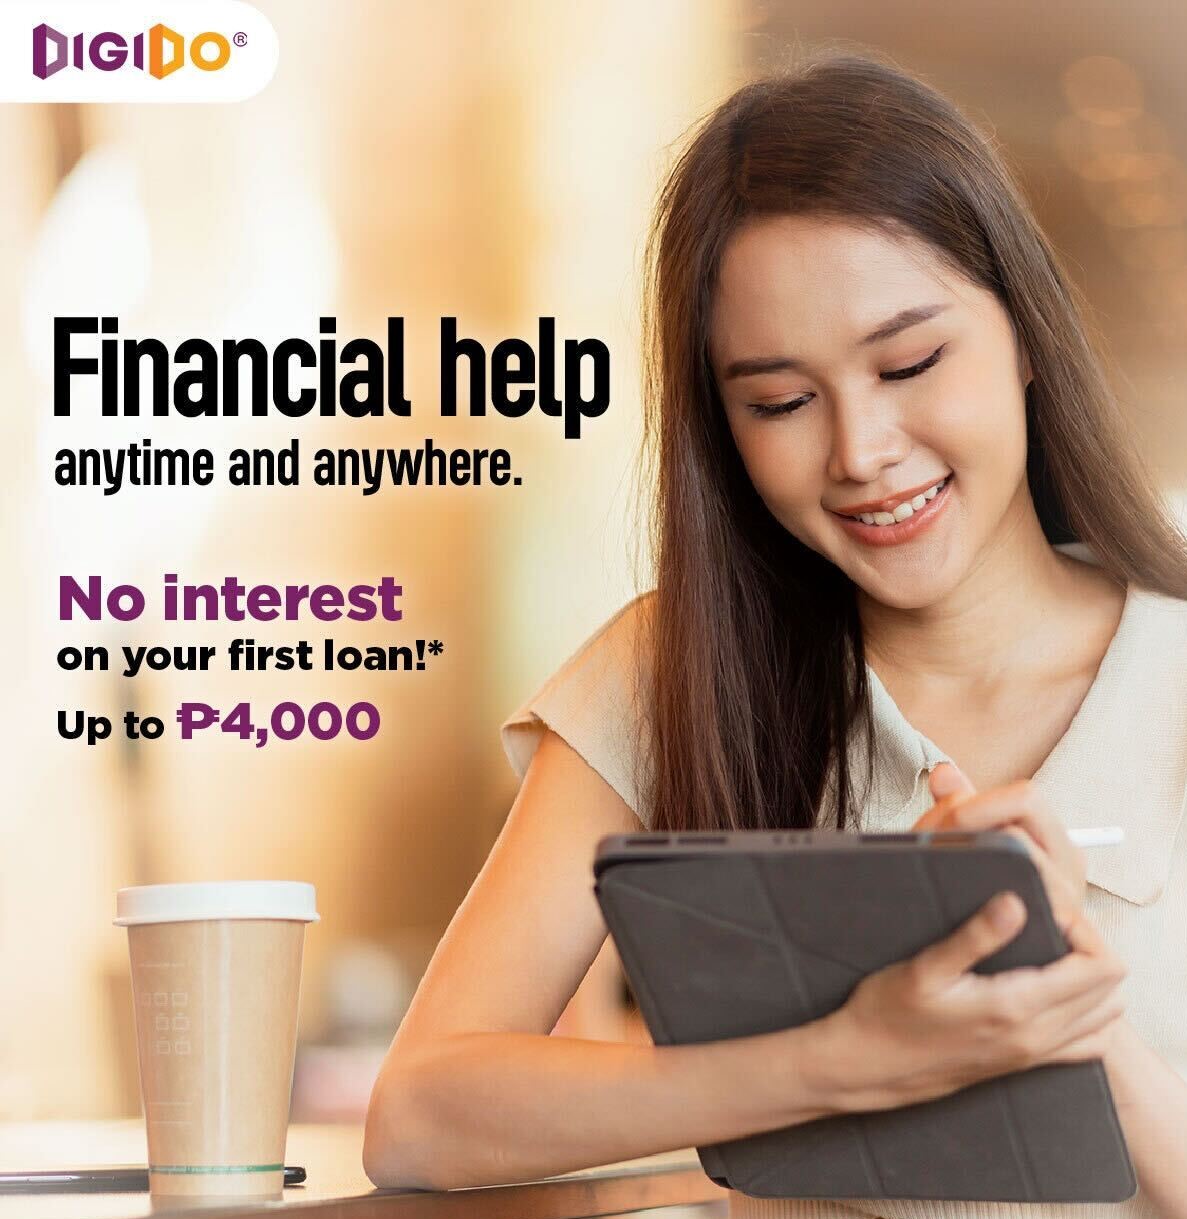 Financial help Digido loan